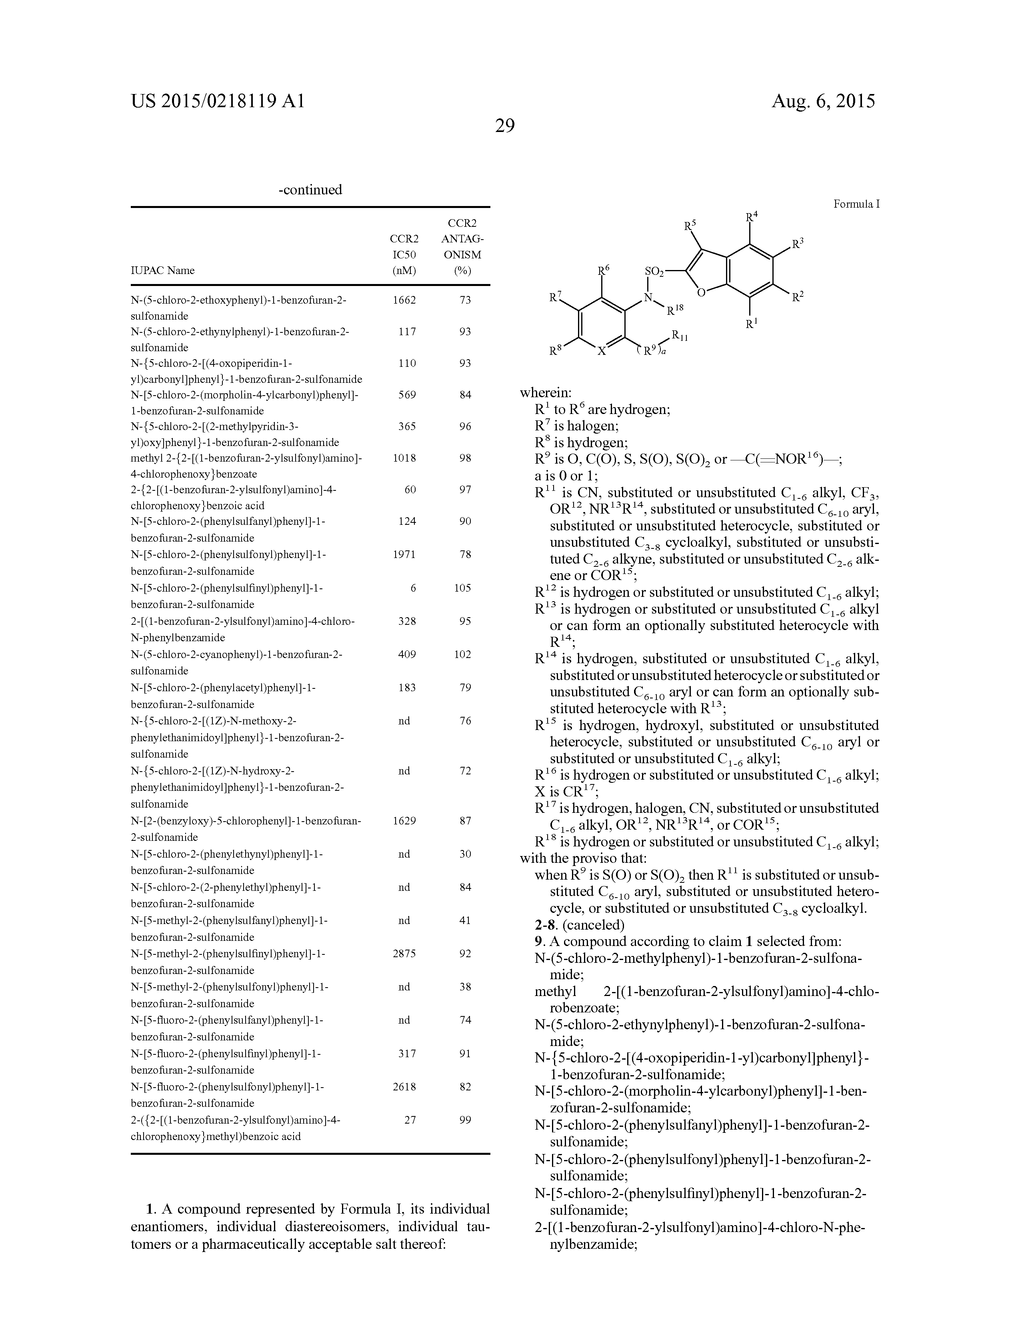 BENZOFURAN-2-SULFONAMIDES DERIVATIVES AS CHEMOKINE RECEPTOR MODULATORS - diagram, schematic, and image 30